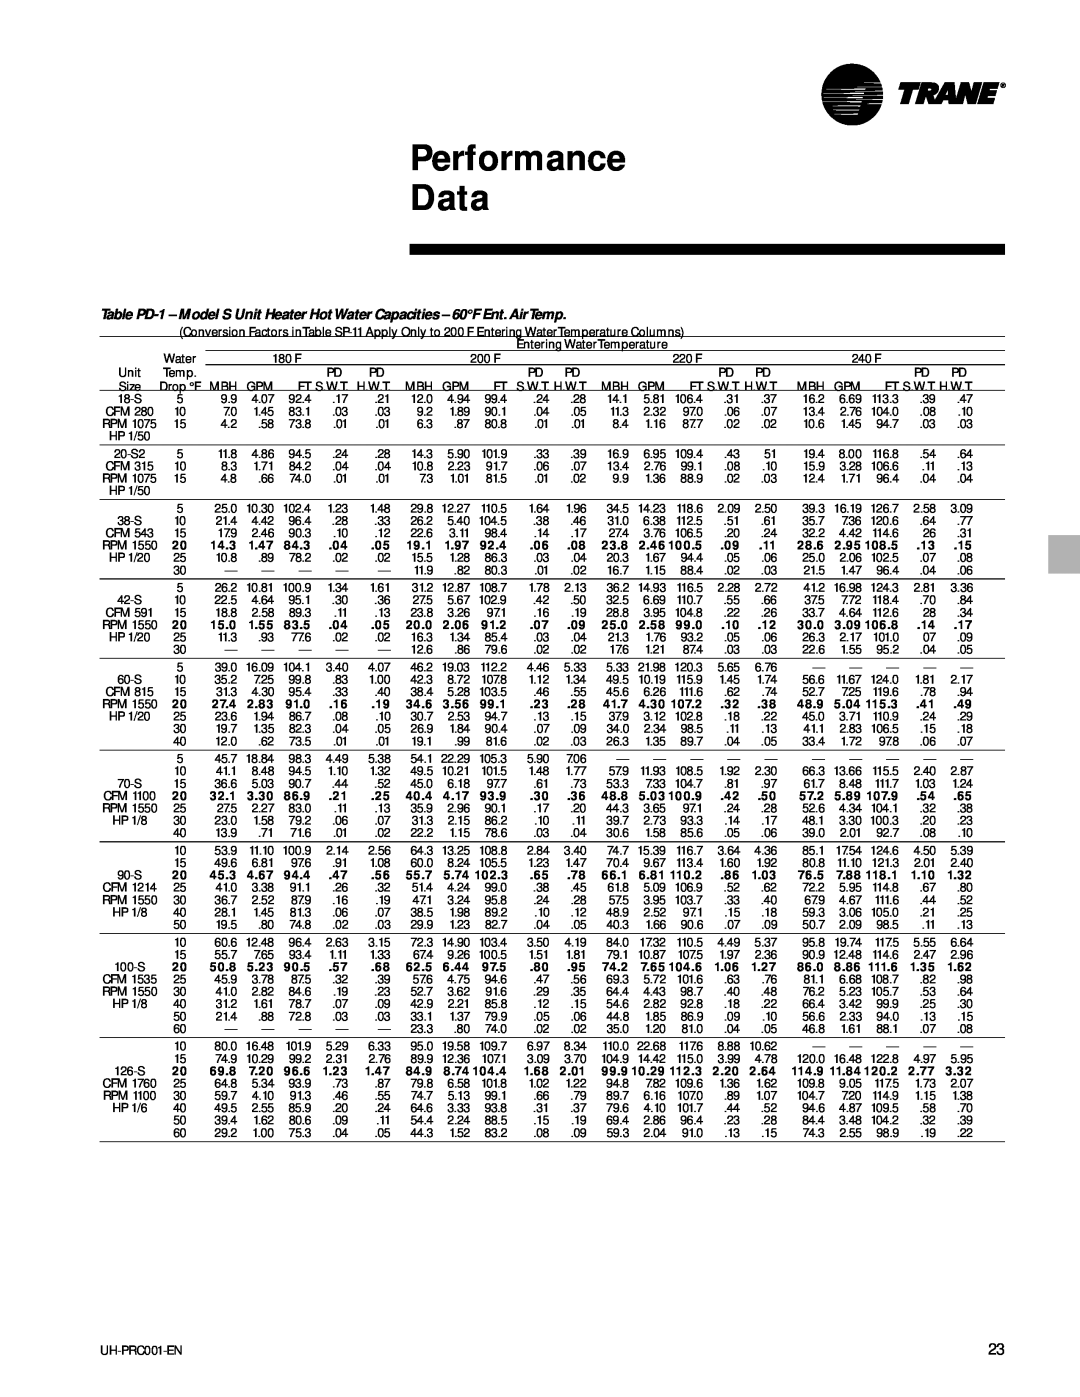 Trane UH-PRC001-EN manual Performance Data 